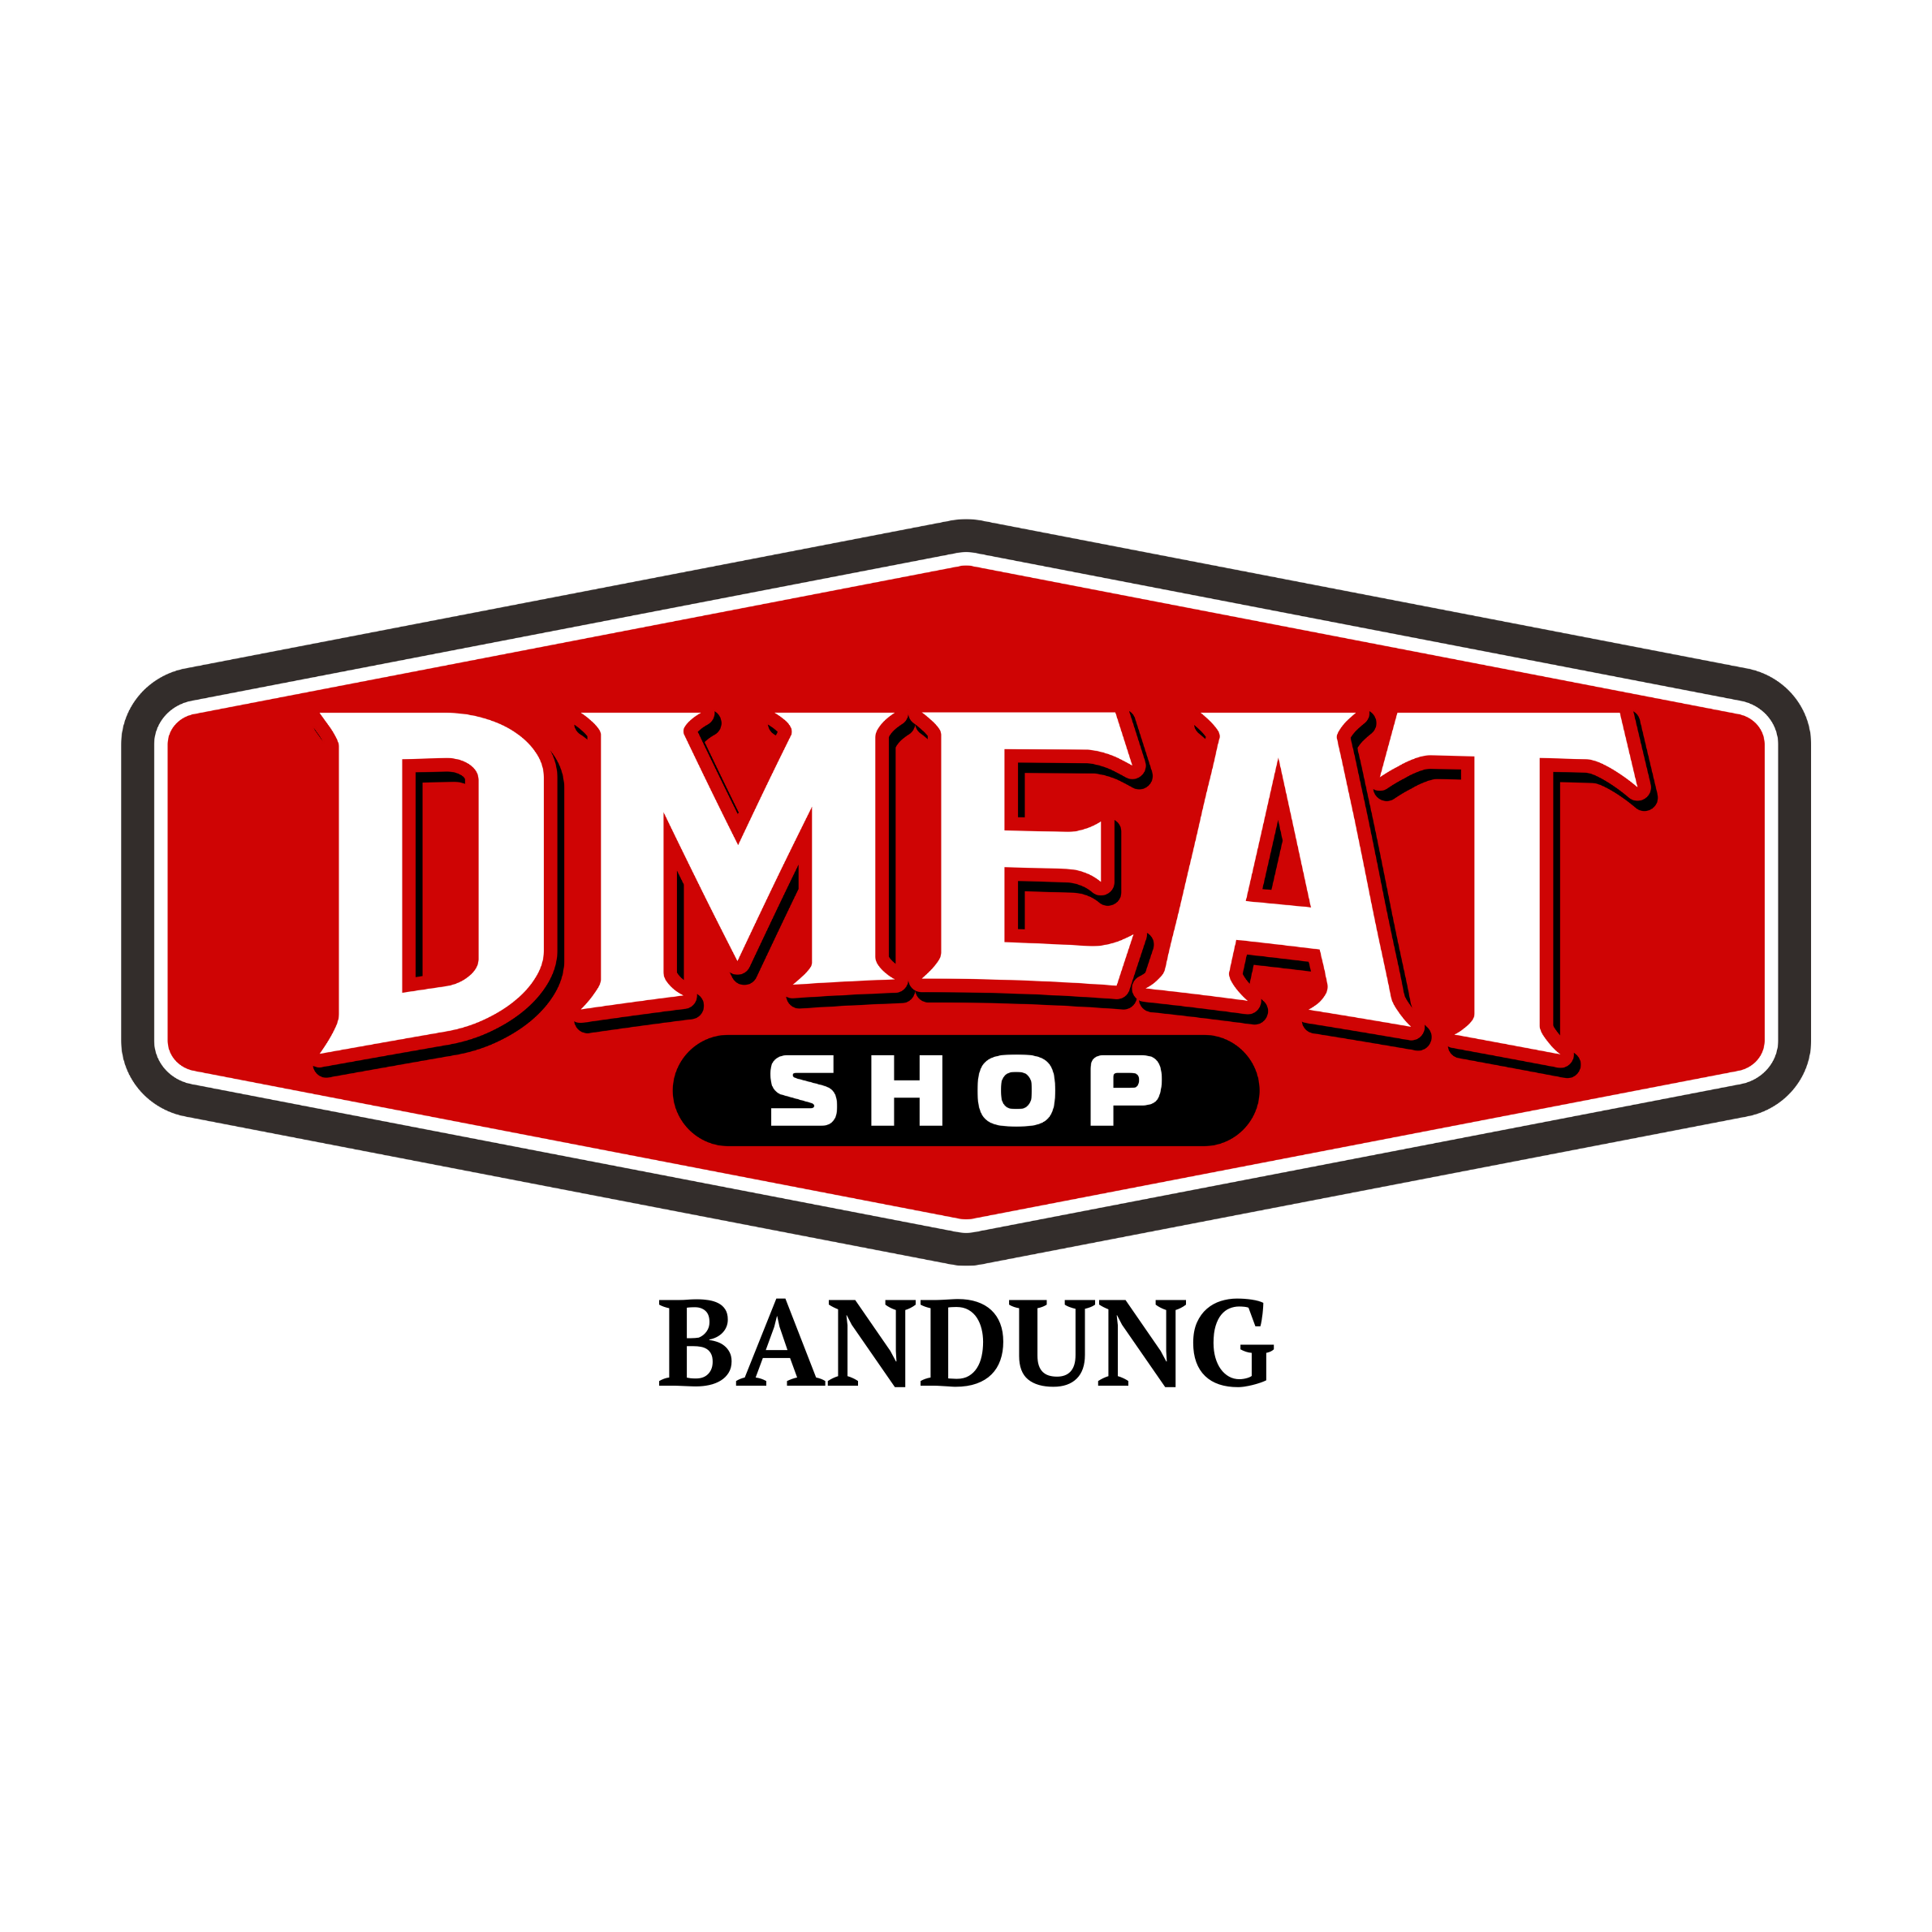 Dmeat Shop Bandung